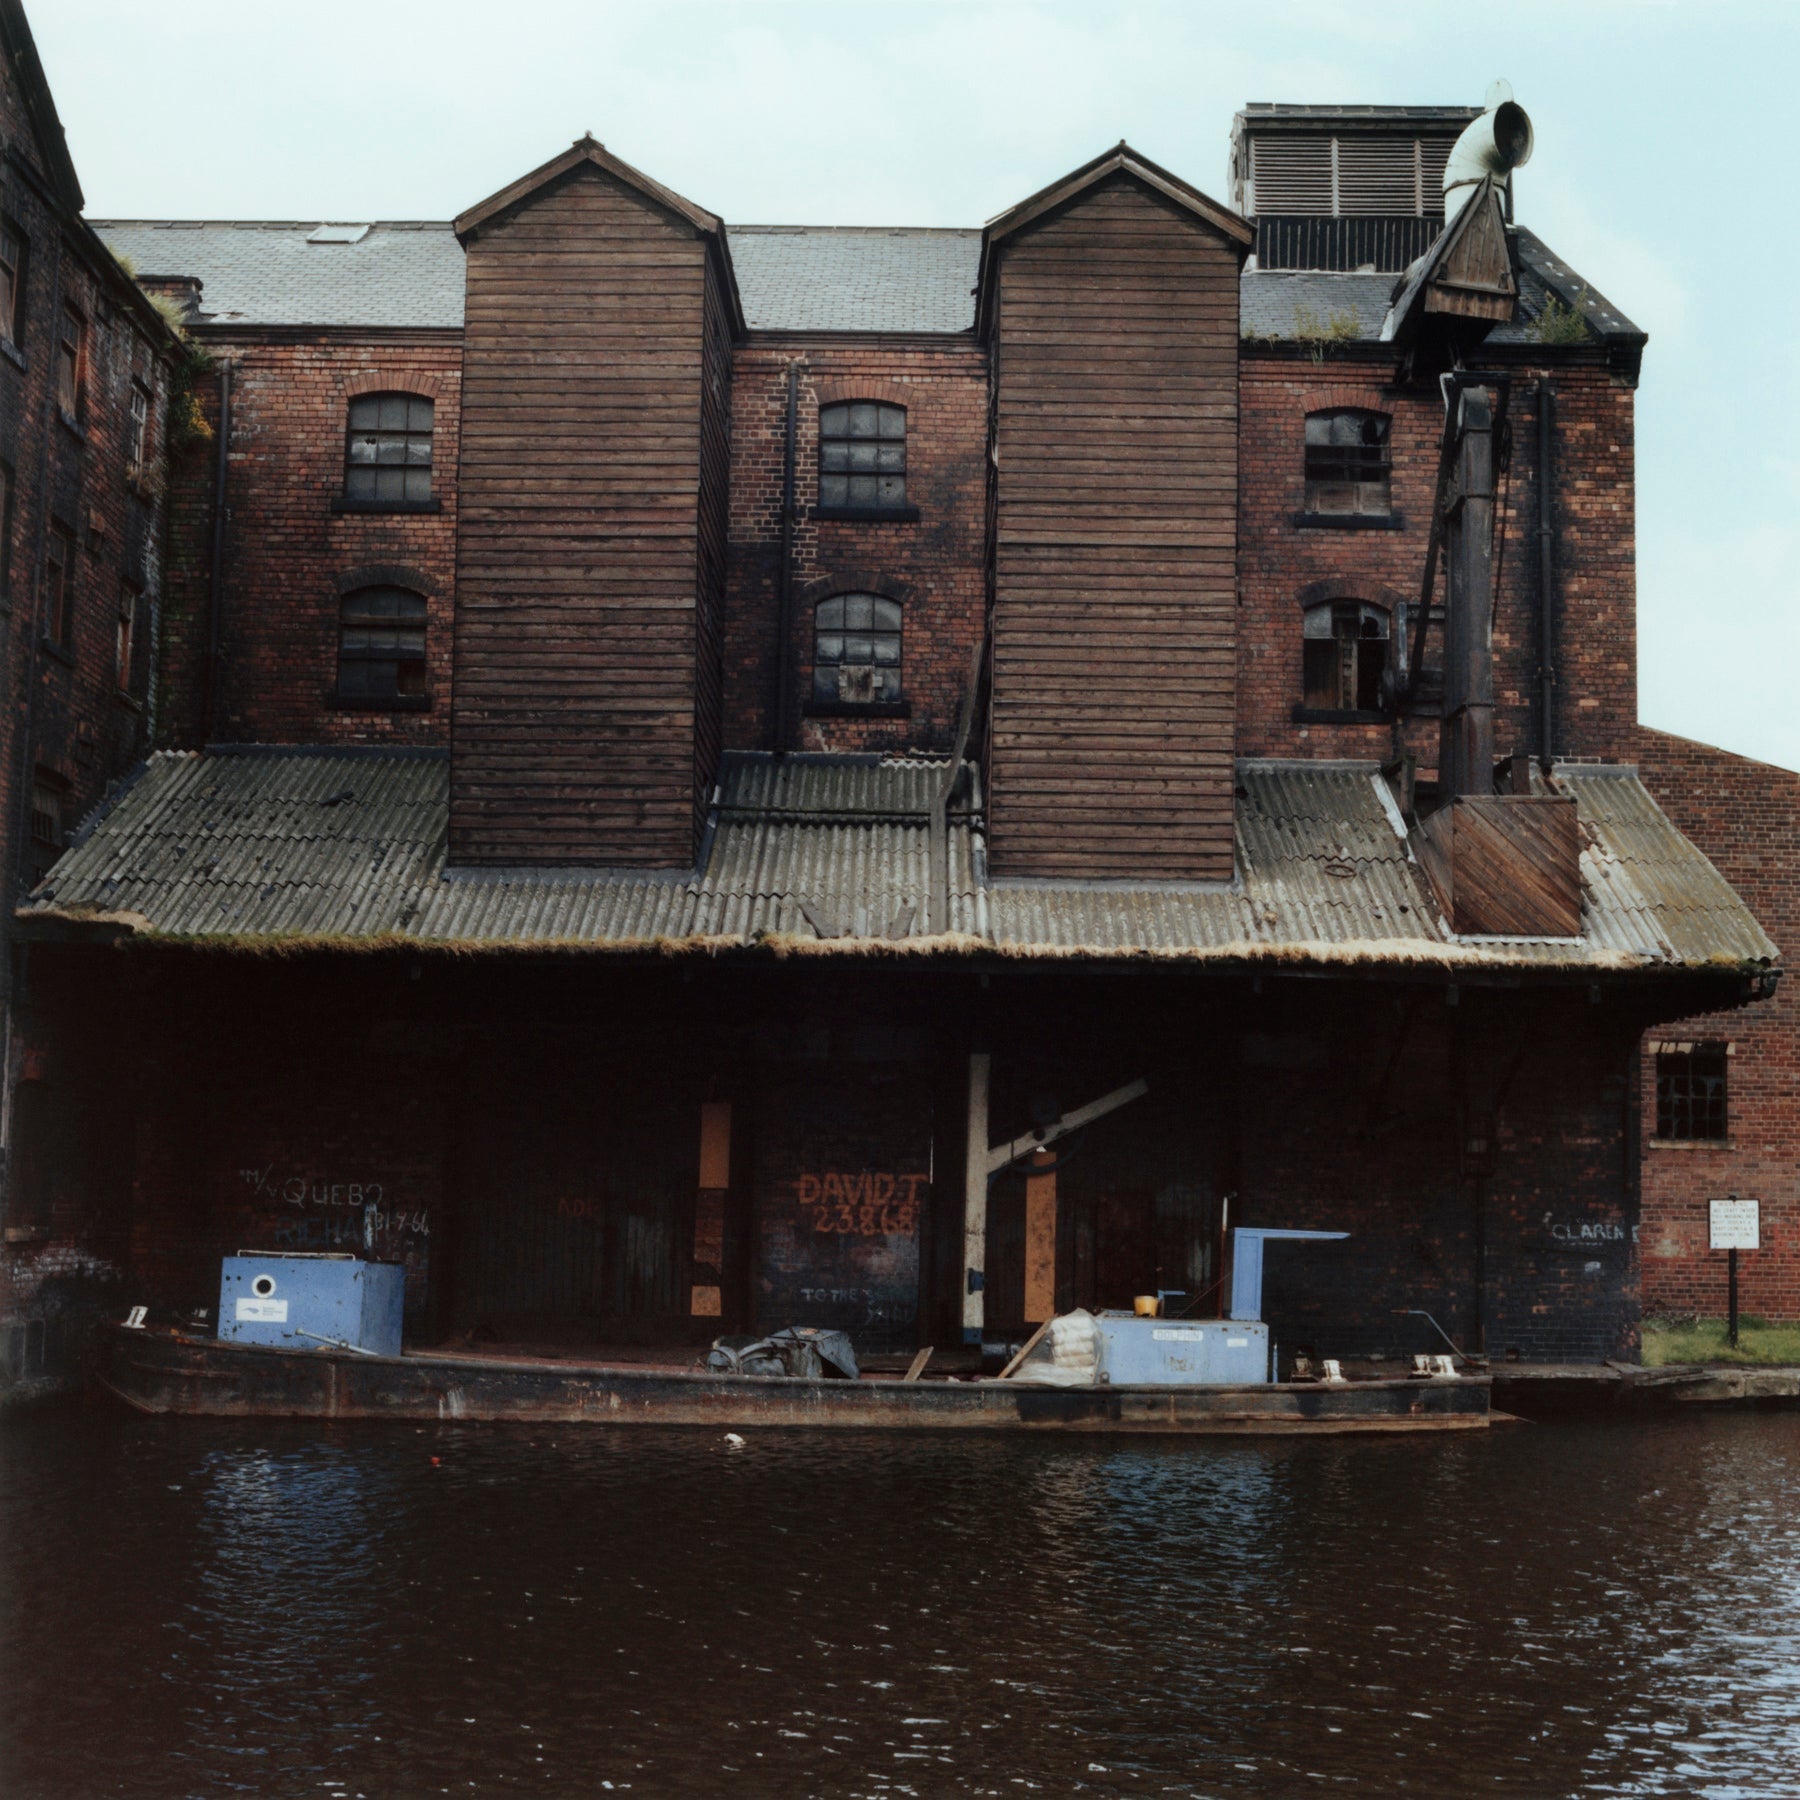 Dock Basin, Sheffield, 1978 - 7x9" Print